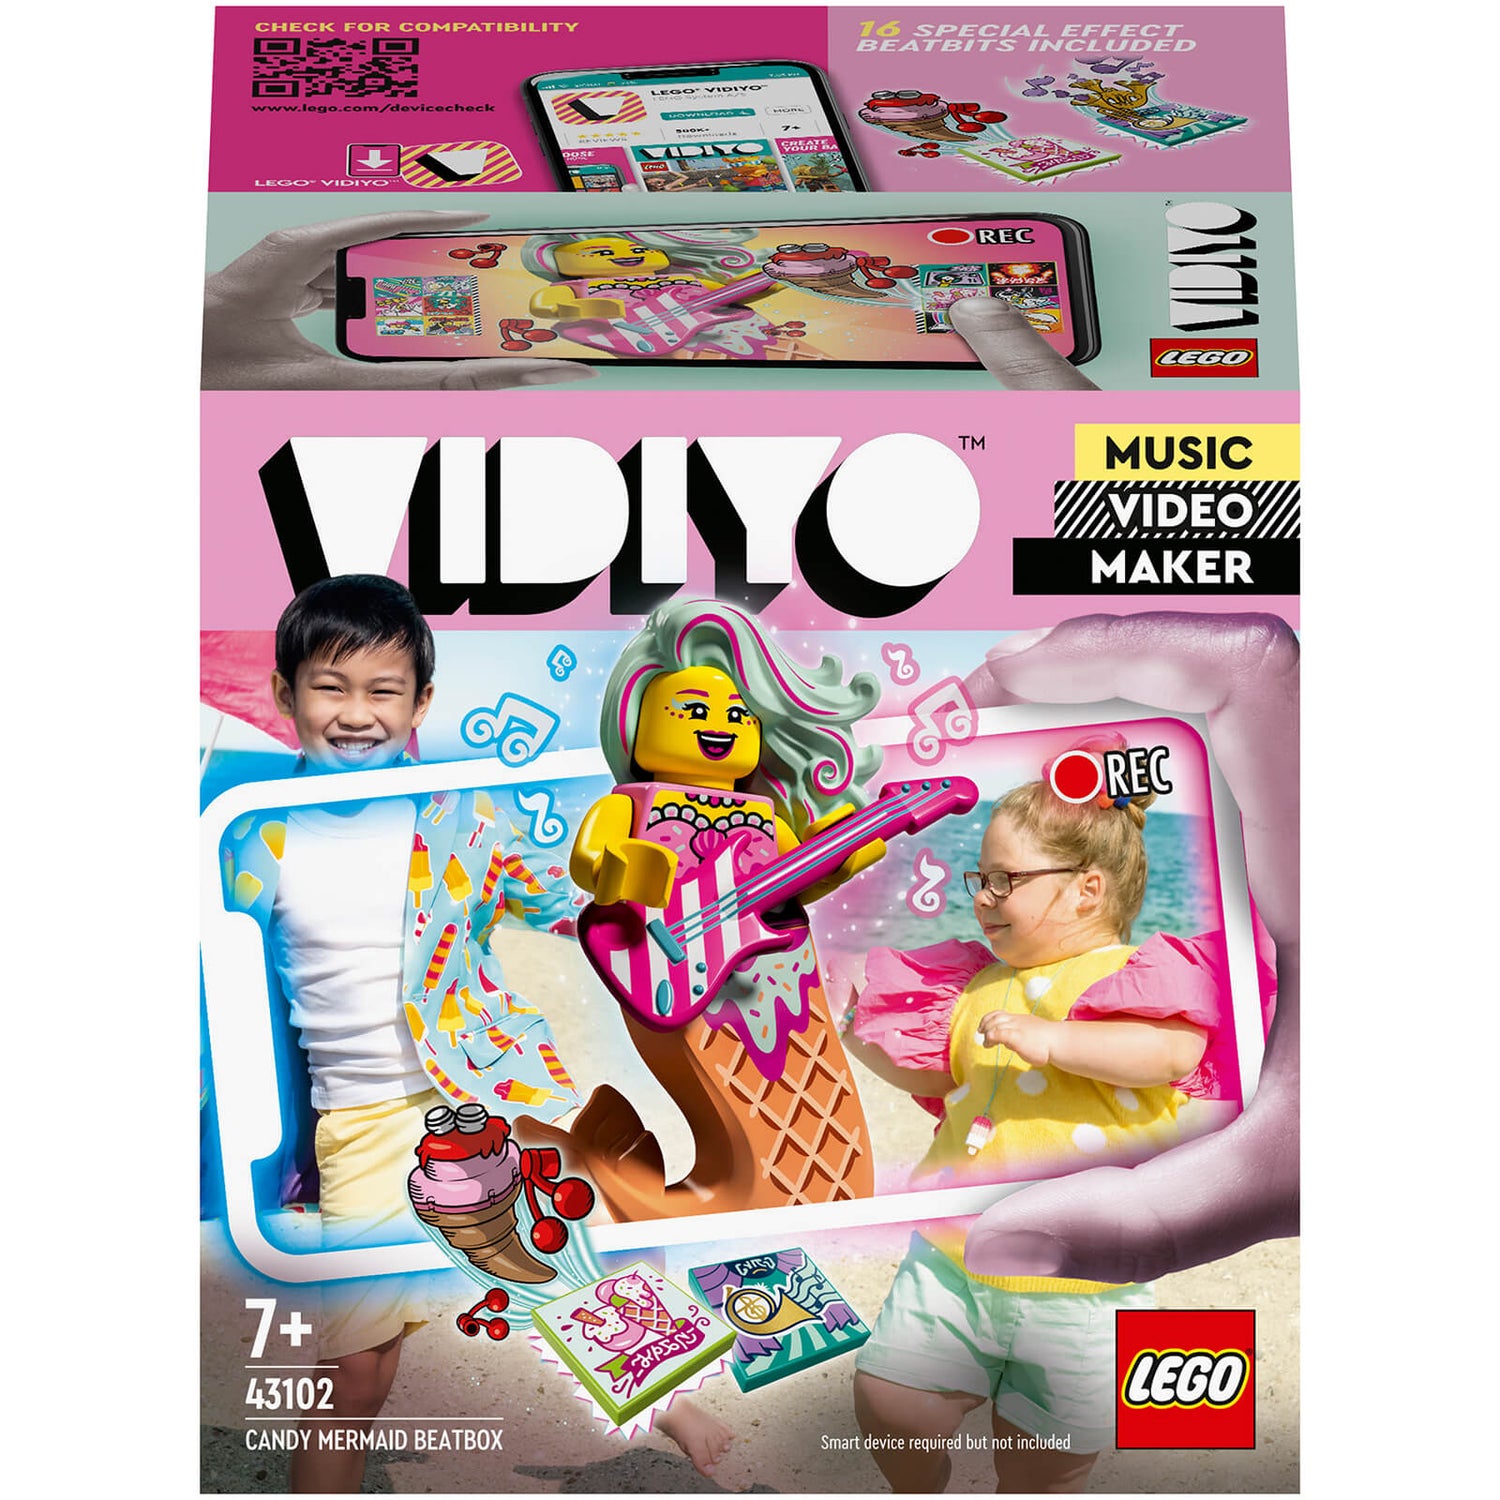 LEGO VIDIYO Candy Zeemeermin BeatBox Muziek Video Maker Speelgoed (43102)